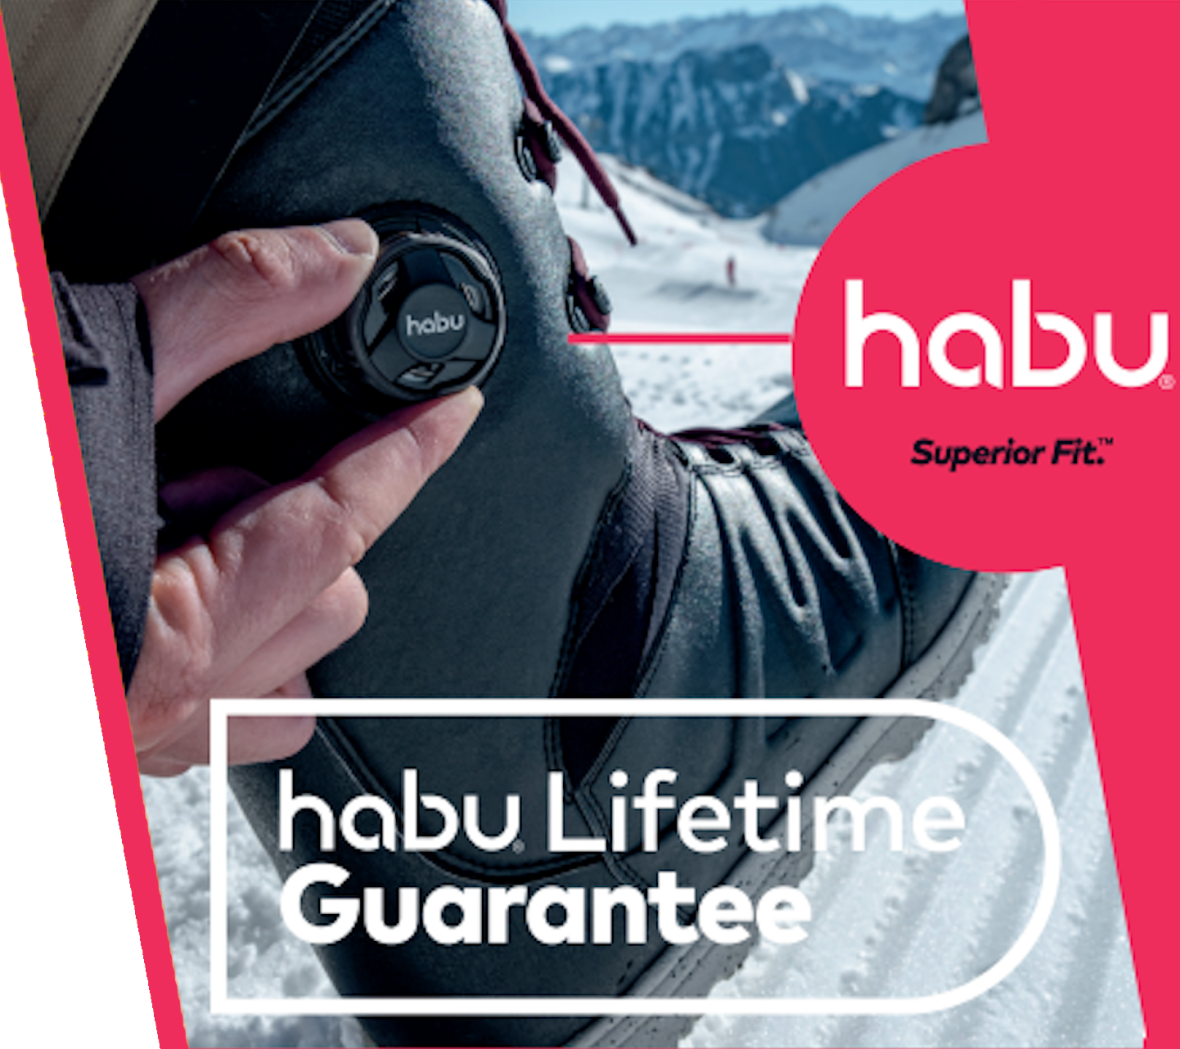 Snowboard Boots HABU-System 